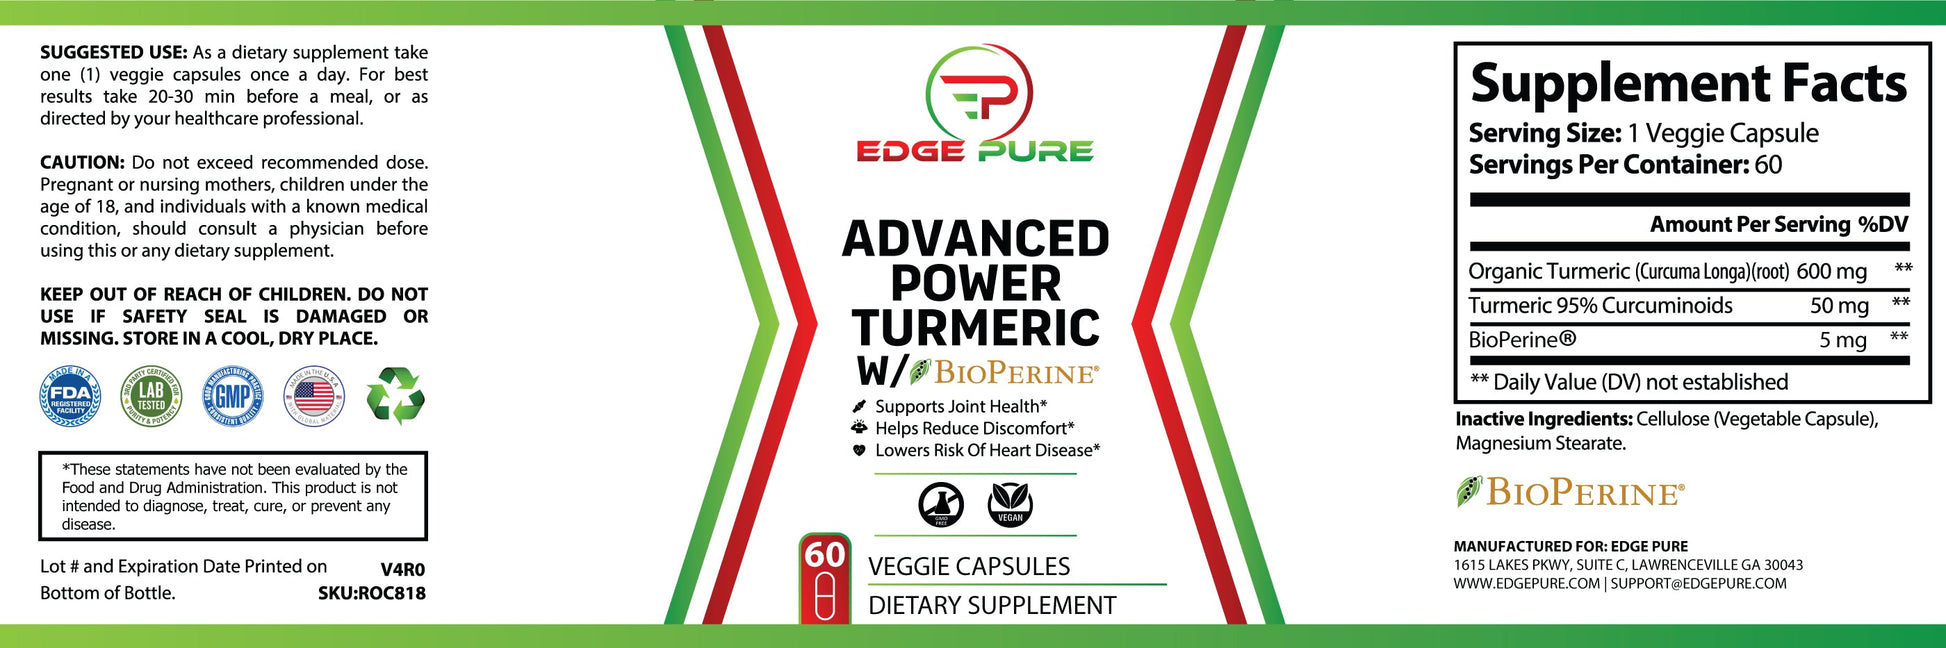 Advanced Power Turmeric w/Bioperine Edge Pure